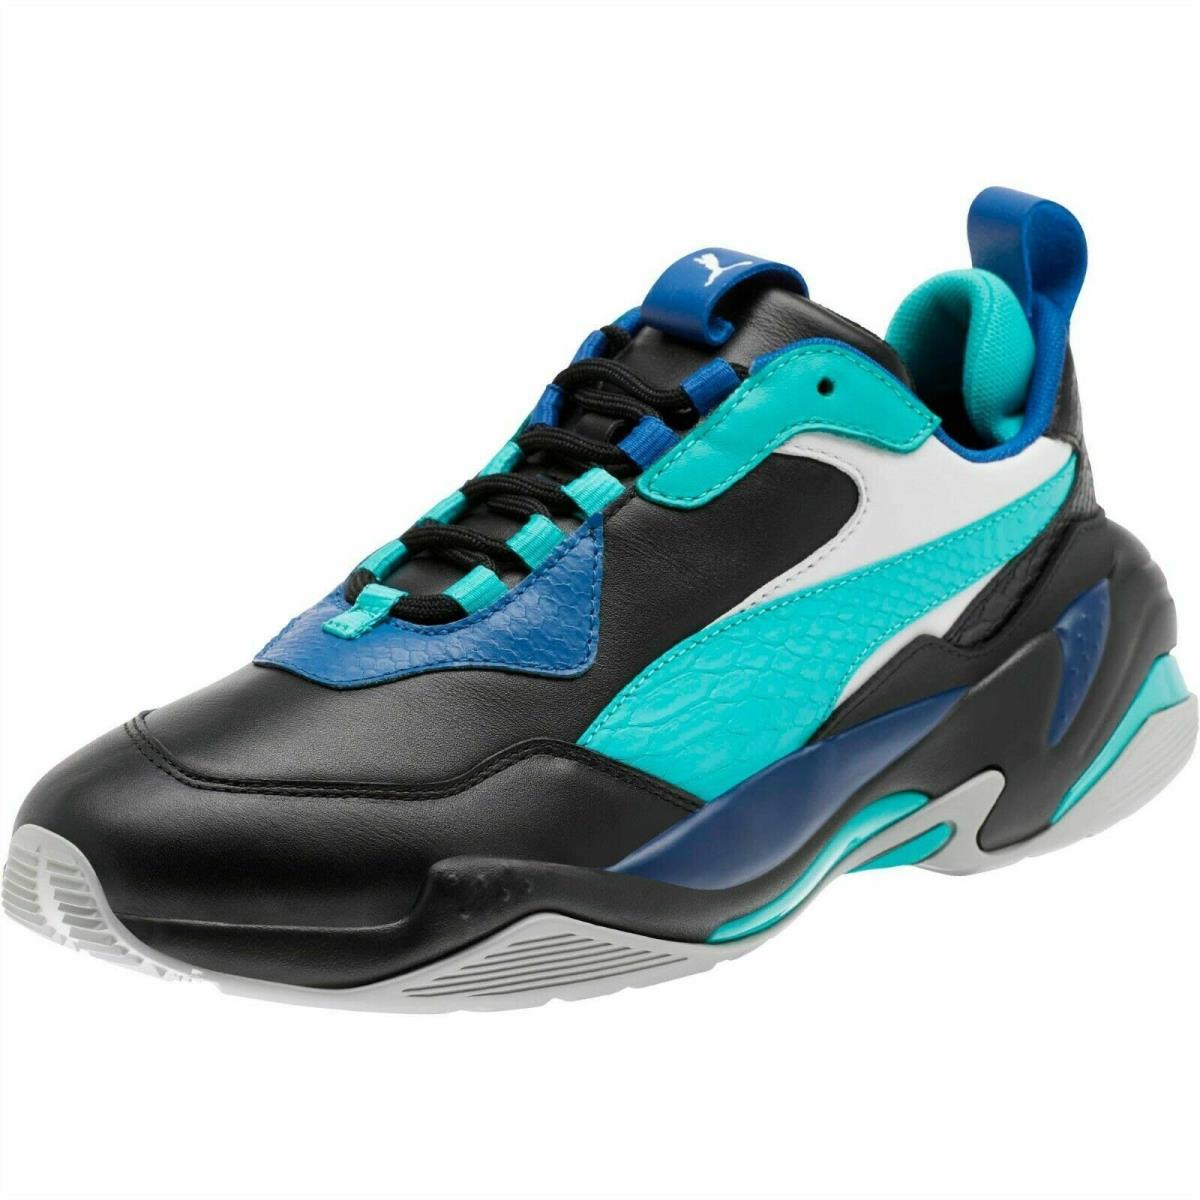 Puma shoes THUNDER HOLIDAY - Puma Black / Blue Turquoise / Galaxy Blue 8